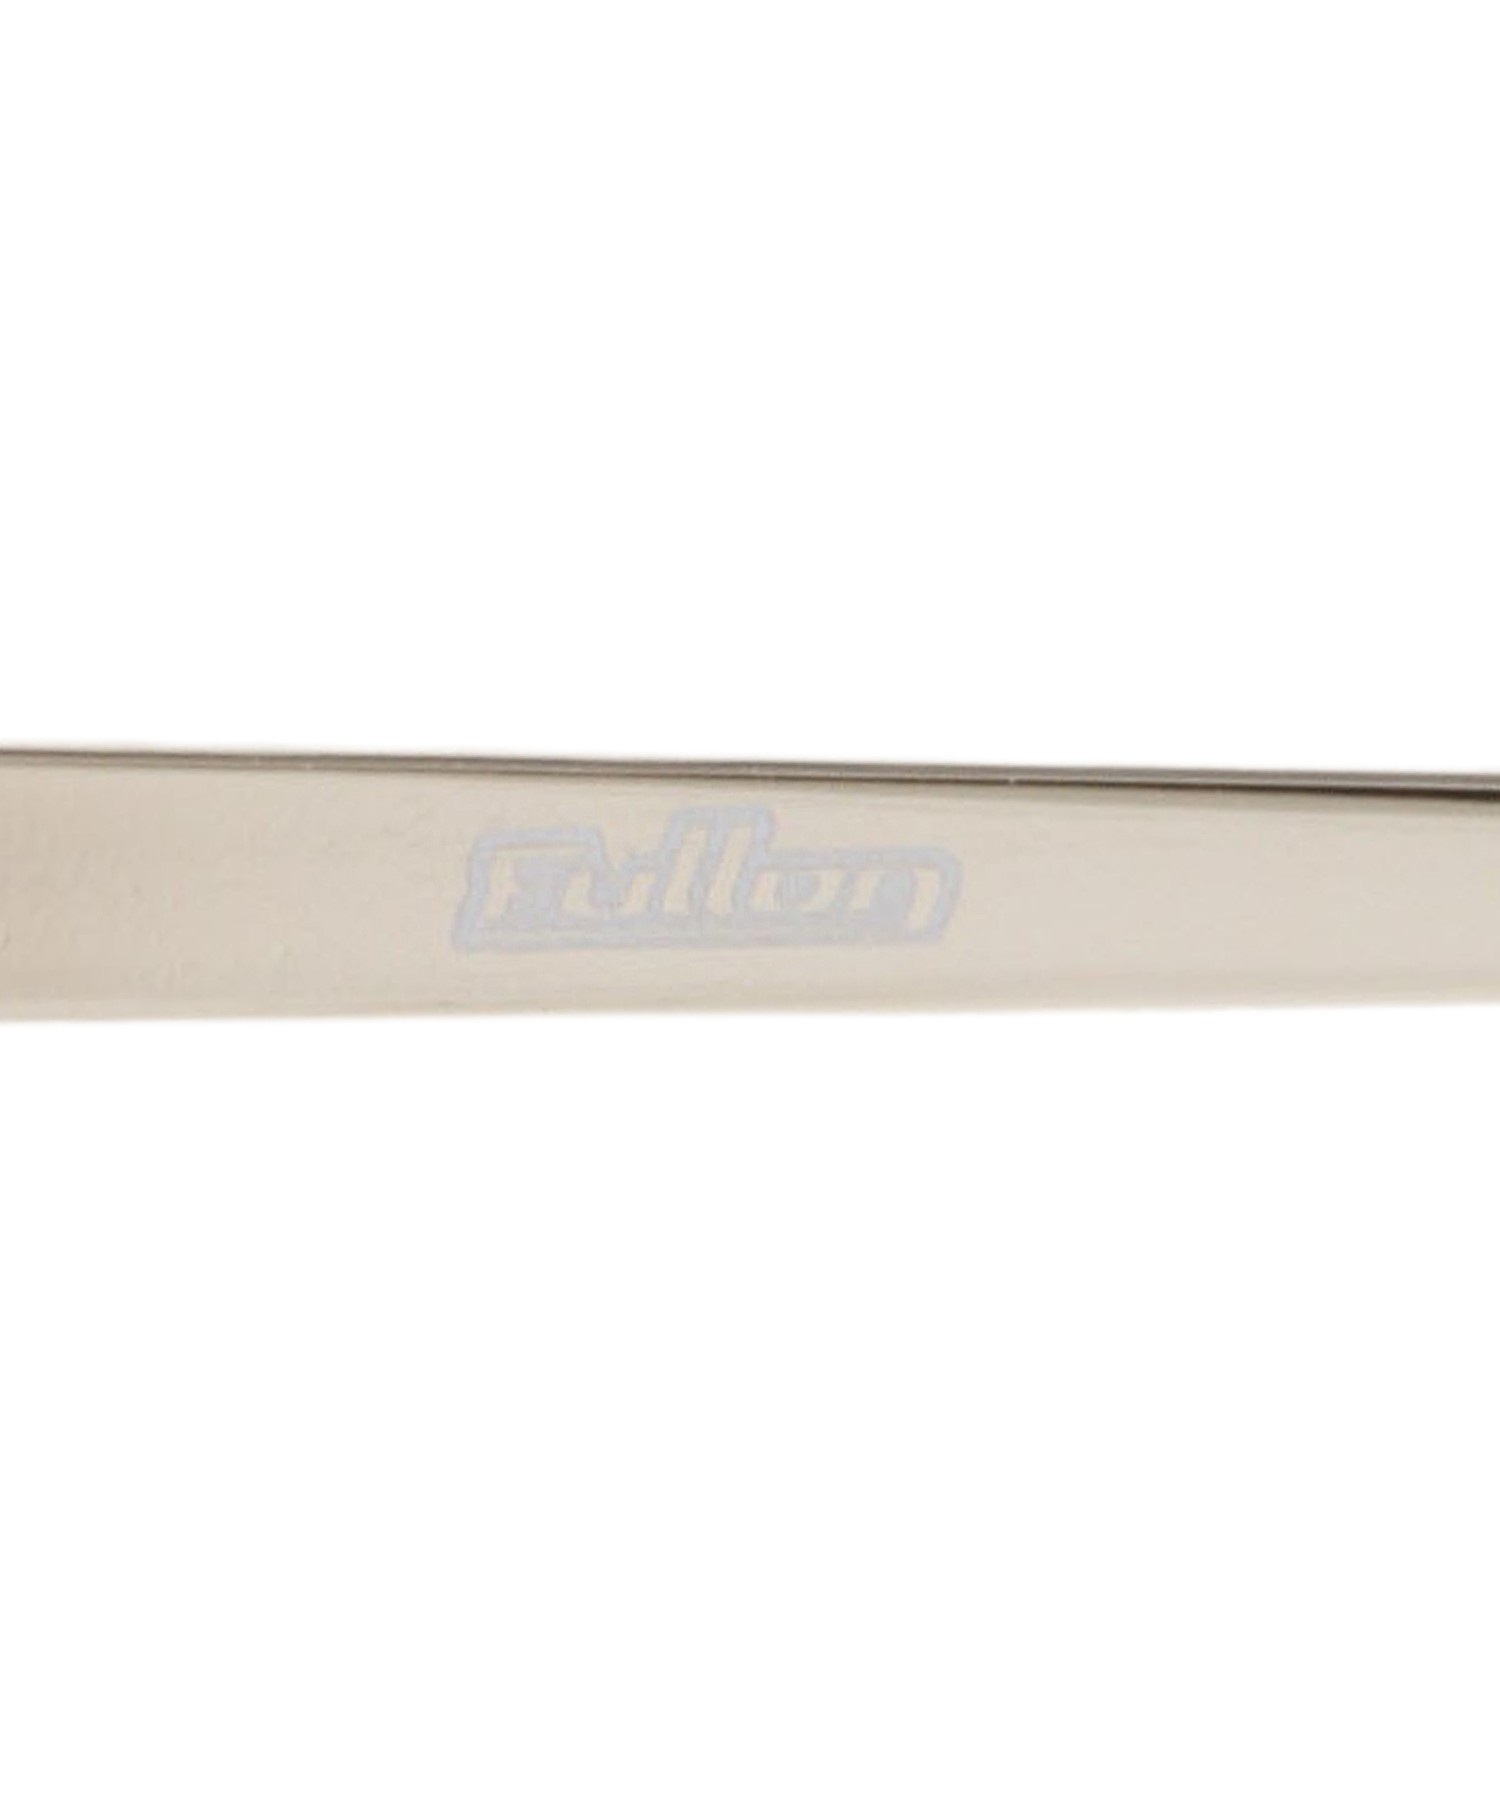 FULLON フローン FBL 064-8 メンズ 眼鏡 メガネ サングラス KK E18(ONECOLOR-F)